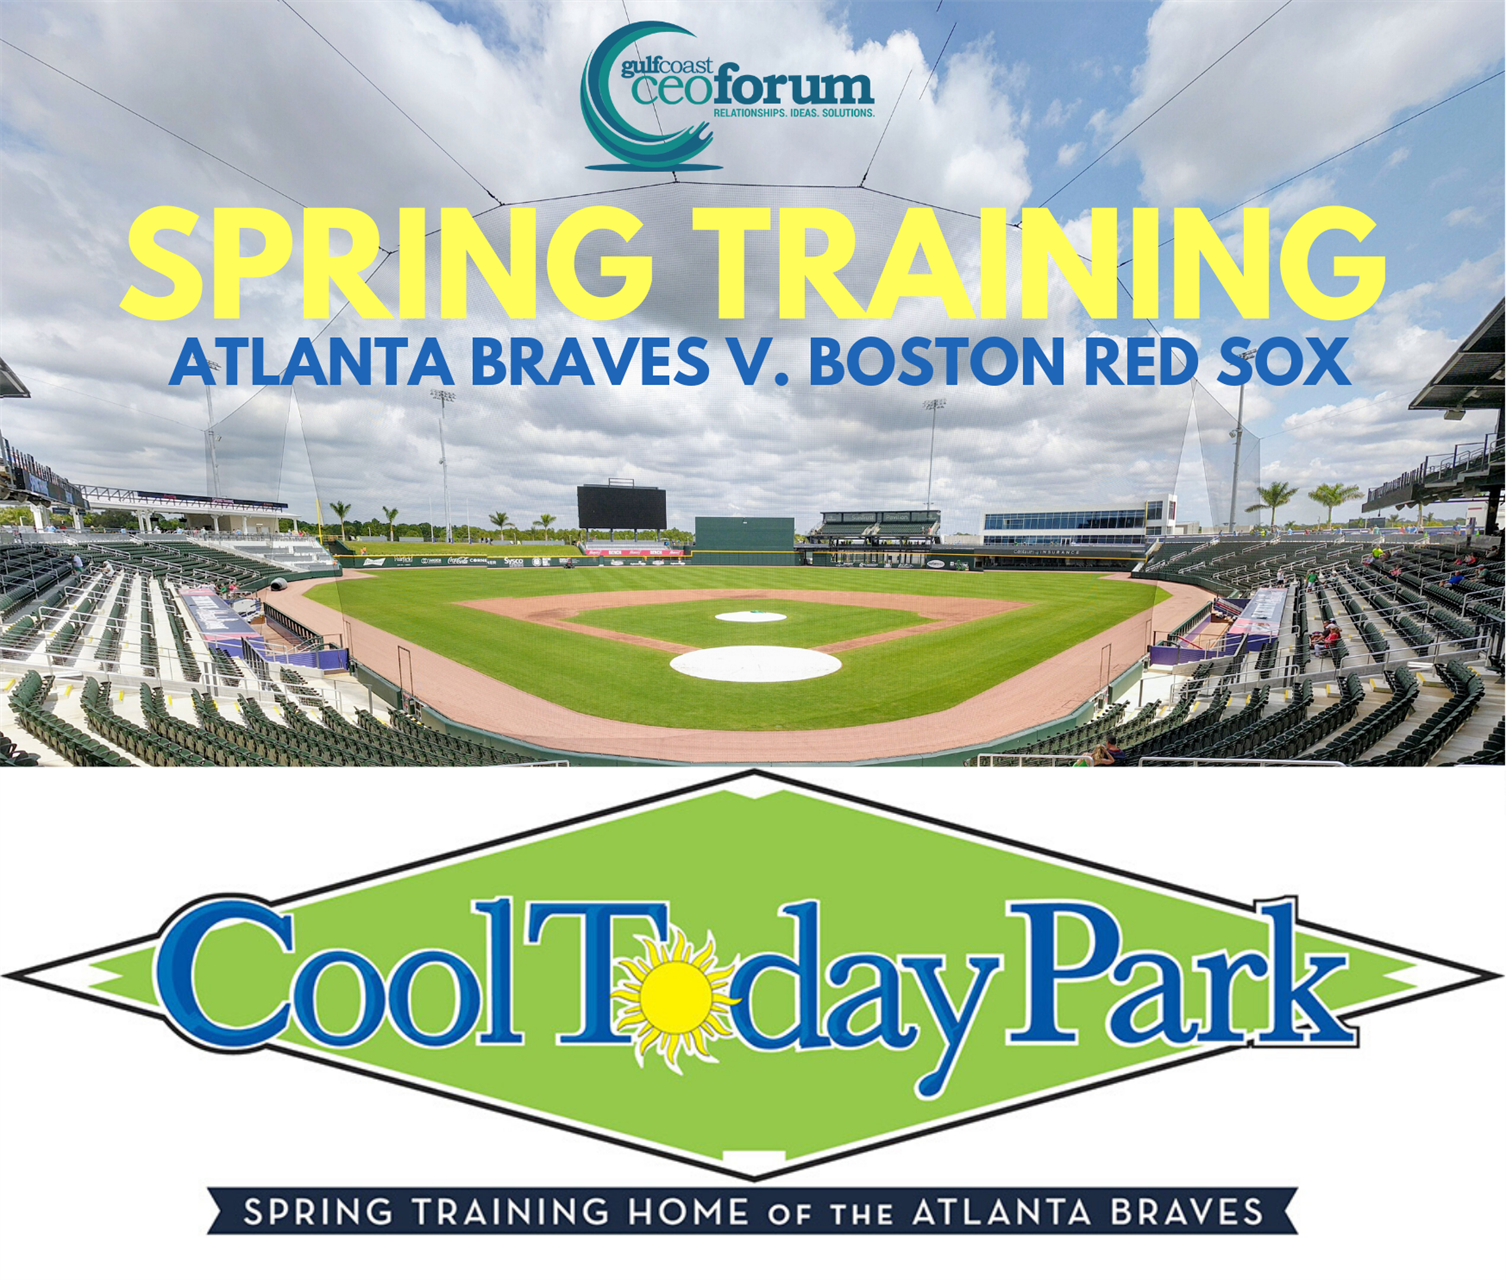 CoolToday Park, Spring Training ballpark of the Atlanta Braves